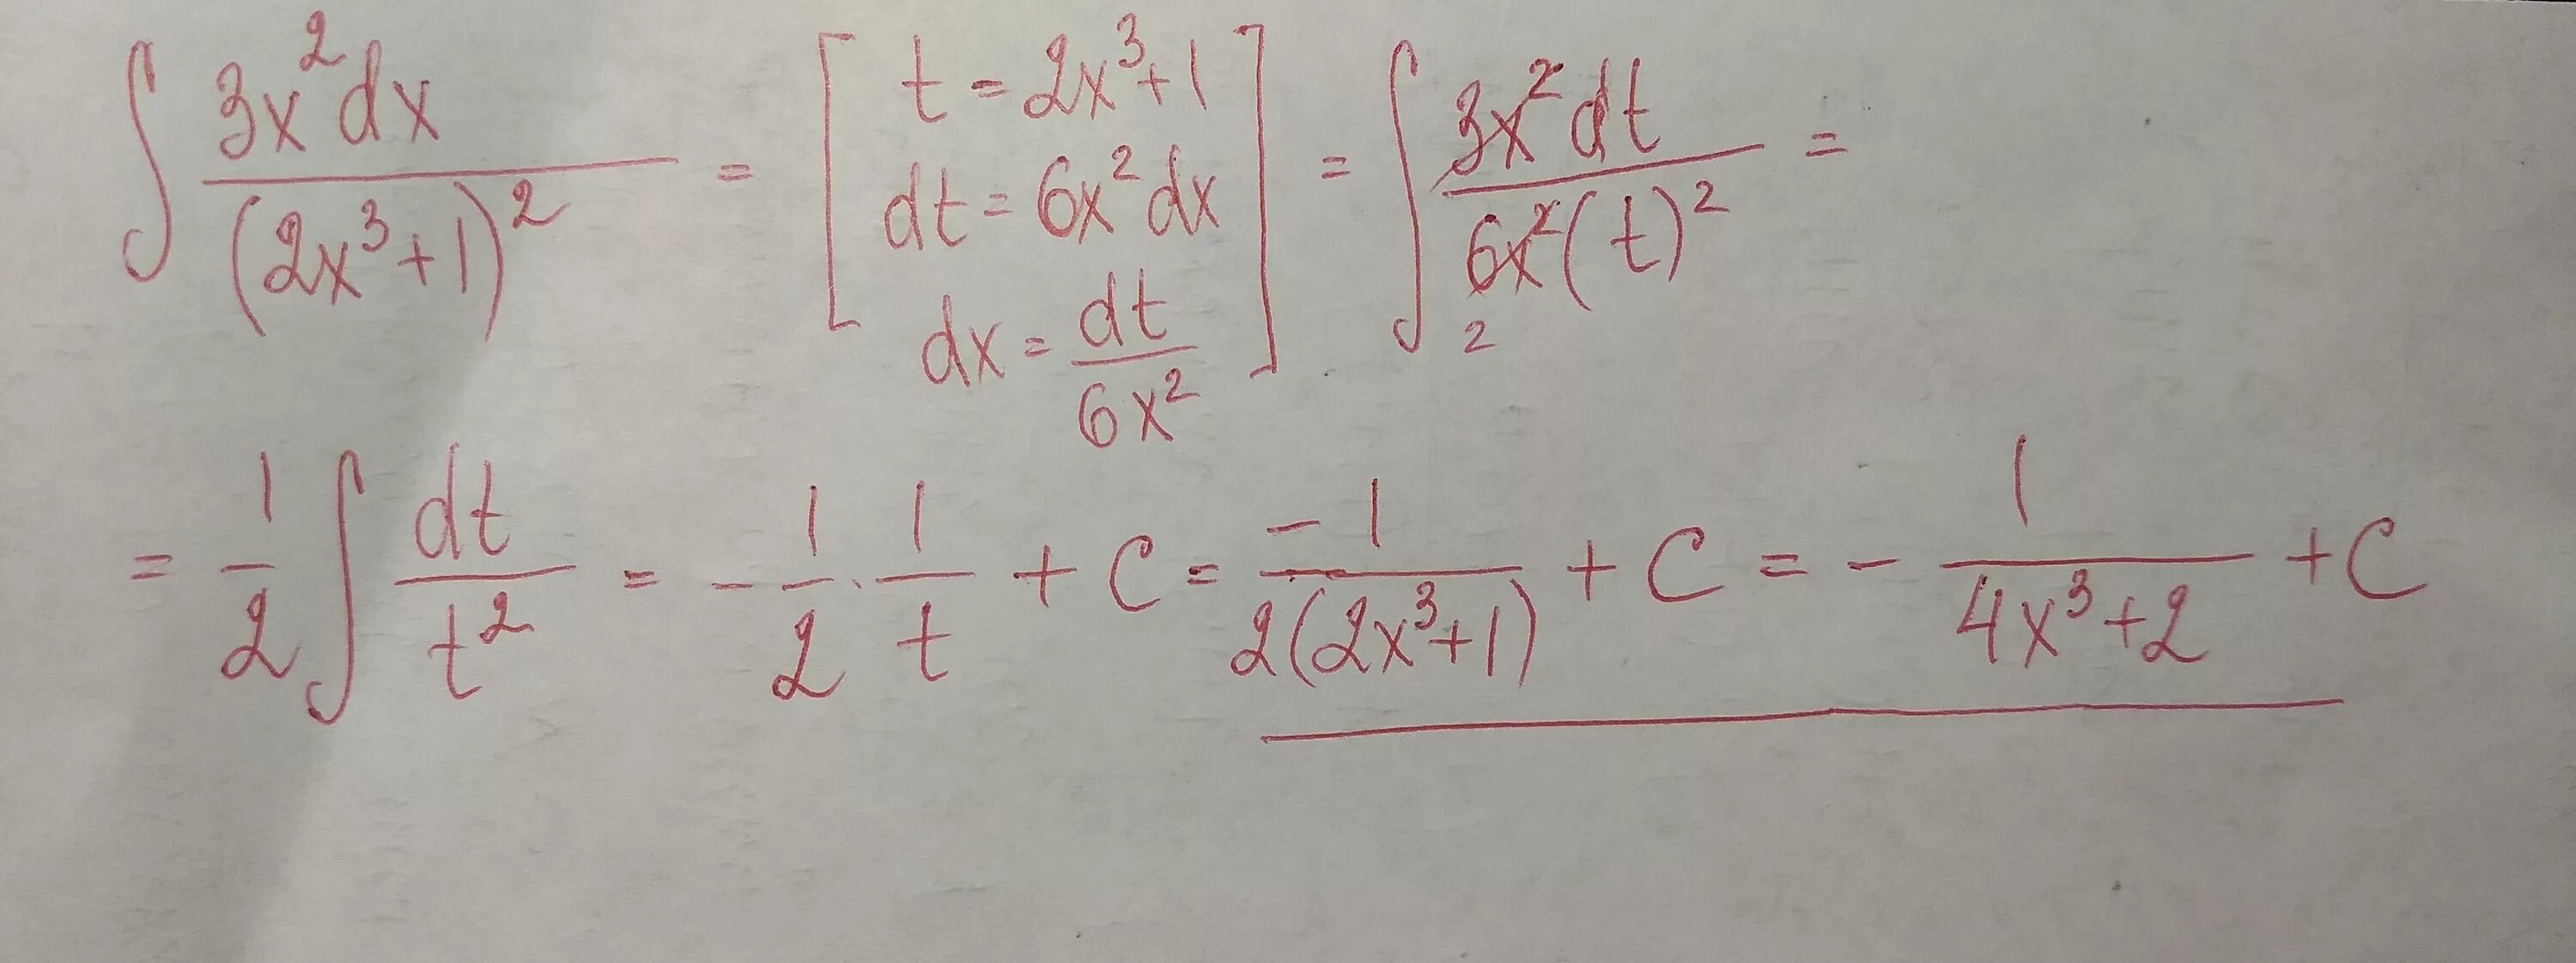 Первообразная 3х 2. Интеграл = DX/ (2+X)^3. 3dx/x+3 интеграл. В результате подстановки t 3x 2 интеграл приводится к виду. Интеграл методом подстановки (3x-2)^5 DX.